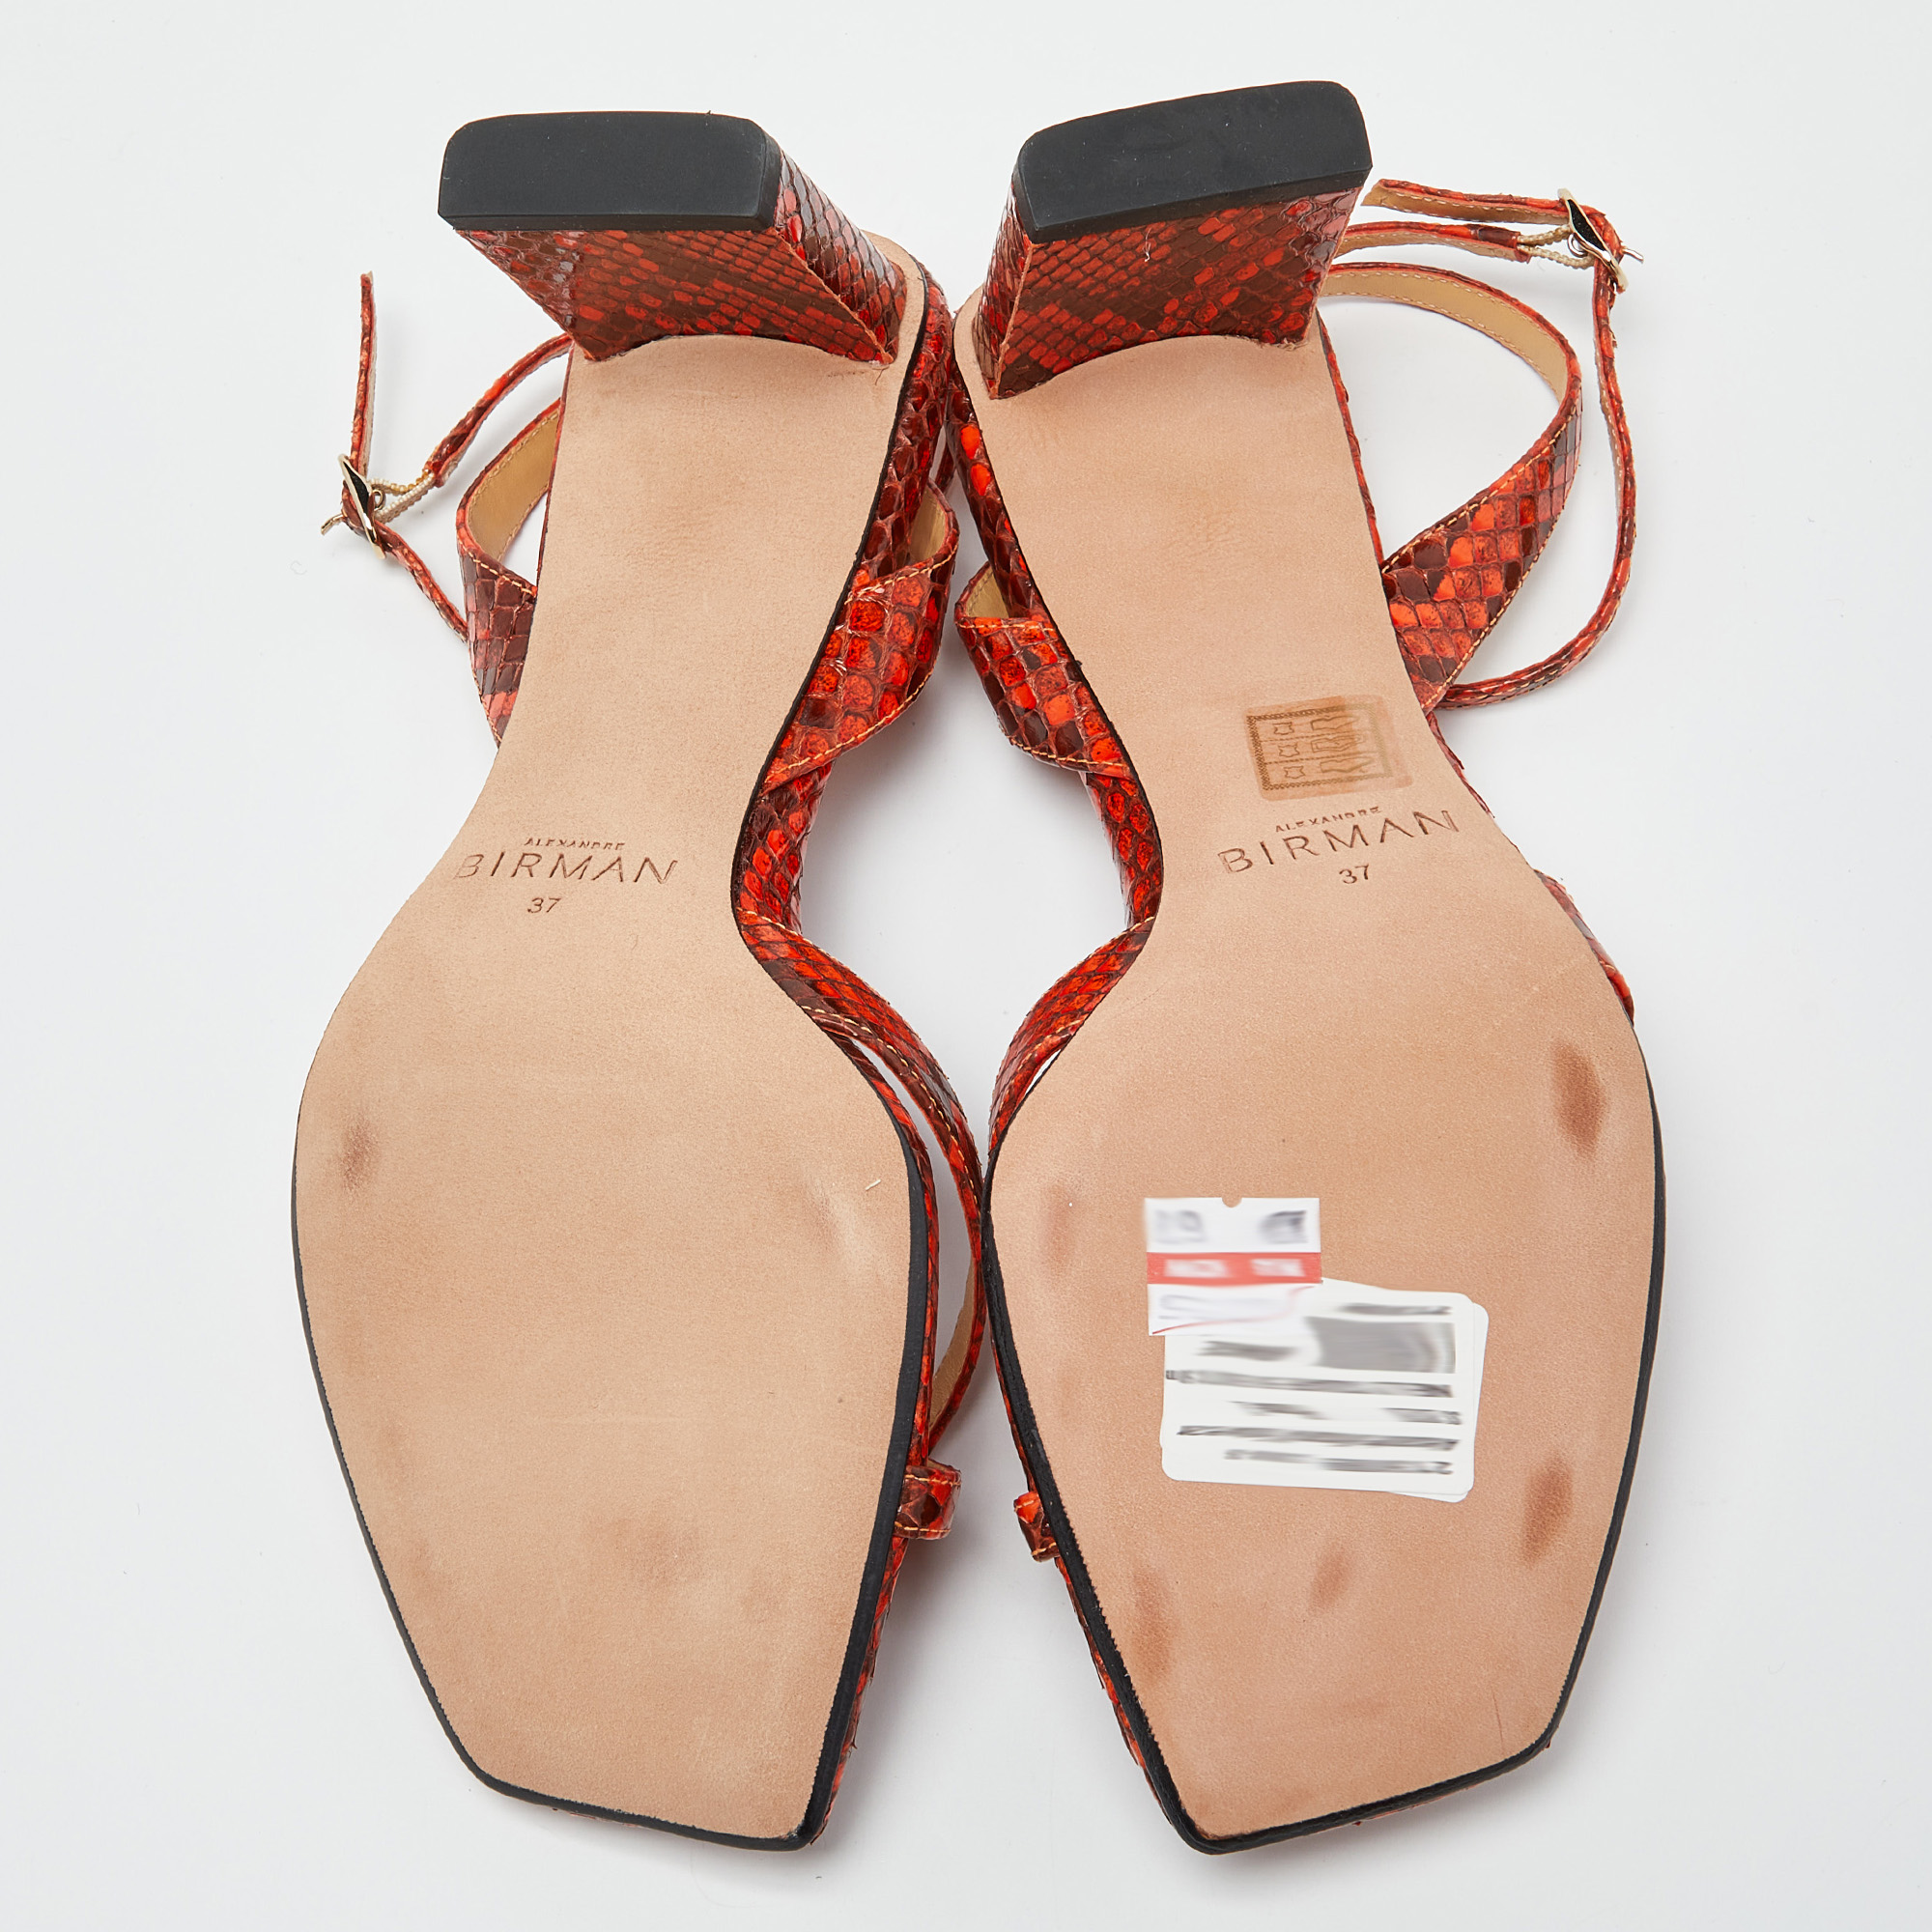 Alexandre Birman Orange Python Nelly Ankle Strap Sandals Size 37